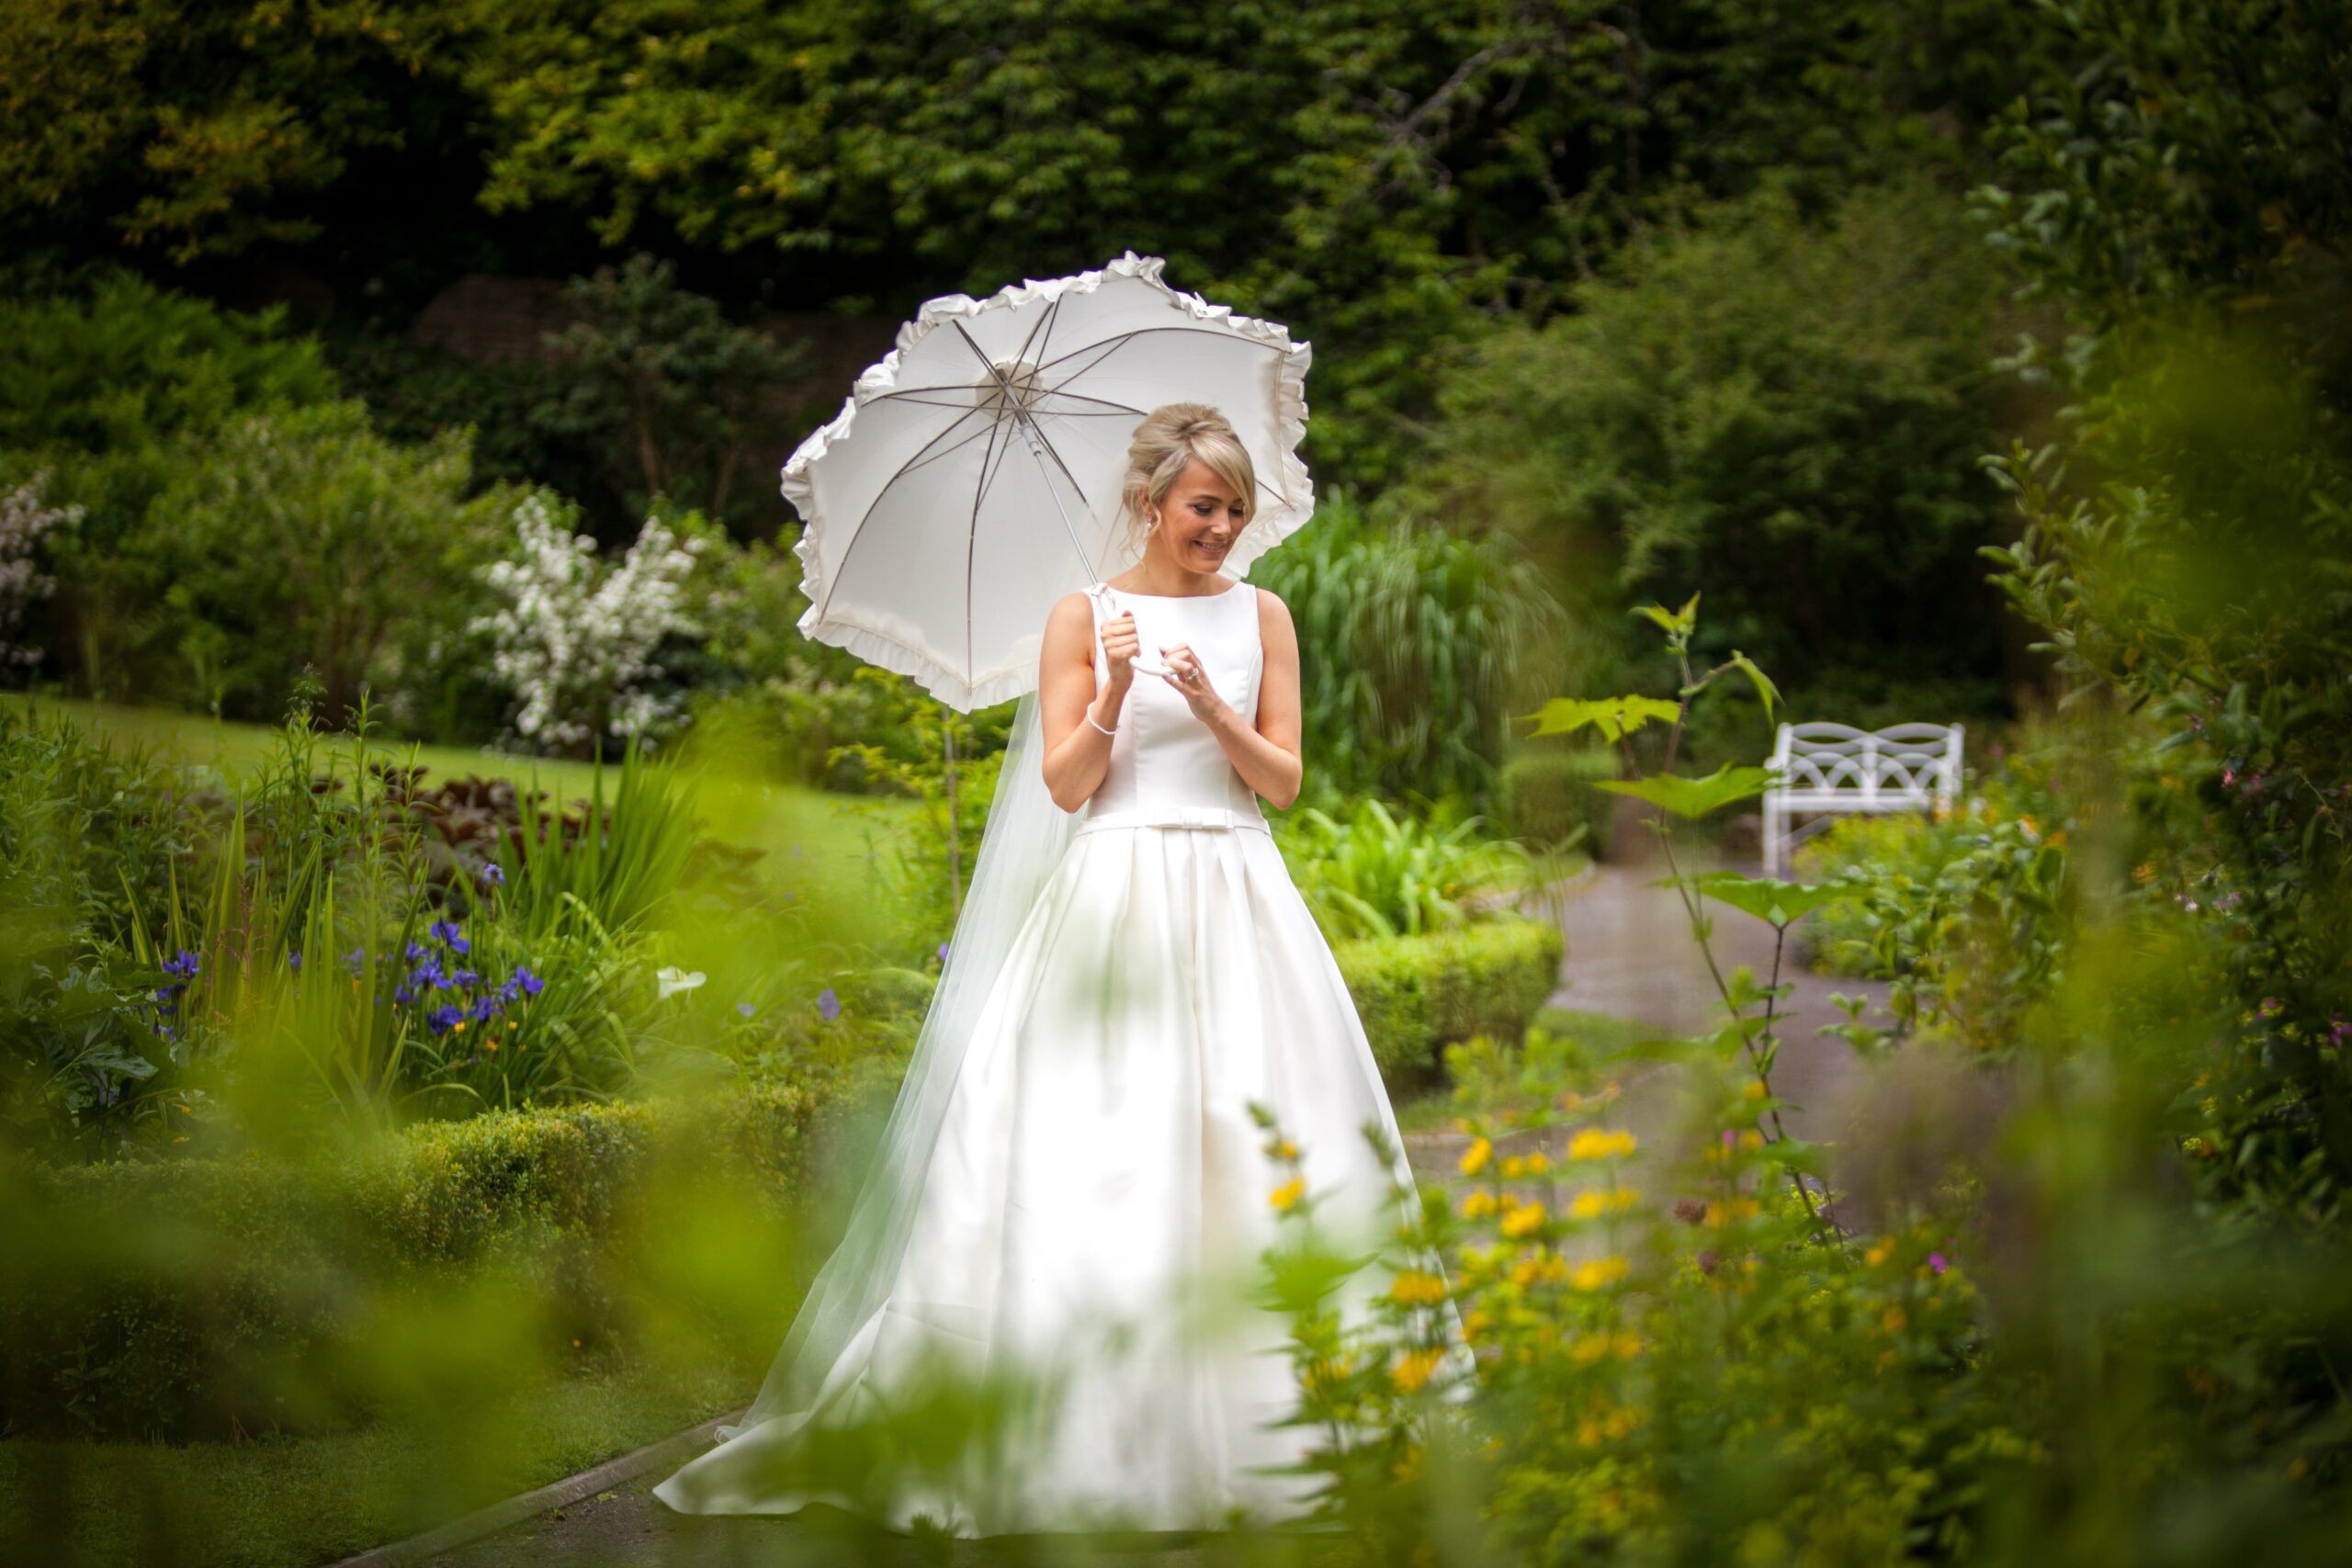 A bride in a wedding dress holding an umbrella, captured by a wedding photographer.